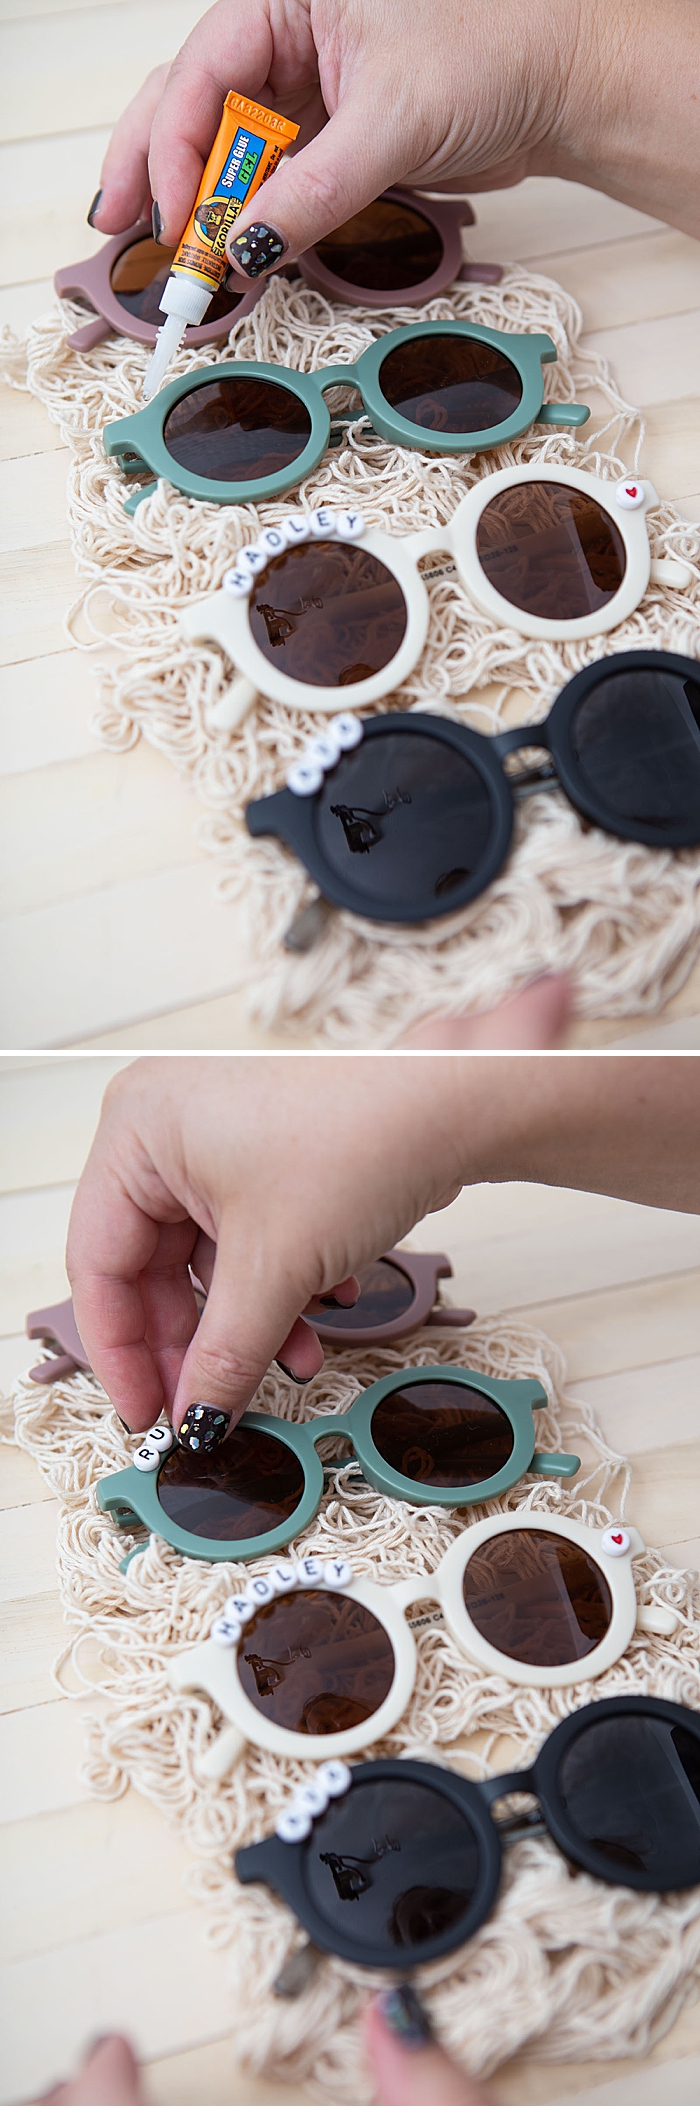 DIY name bead sunglasses, so easy to make!